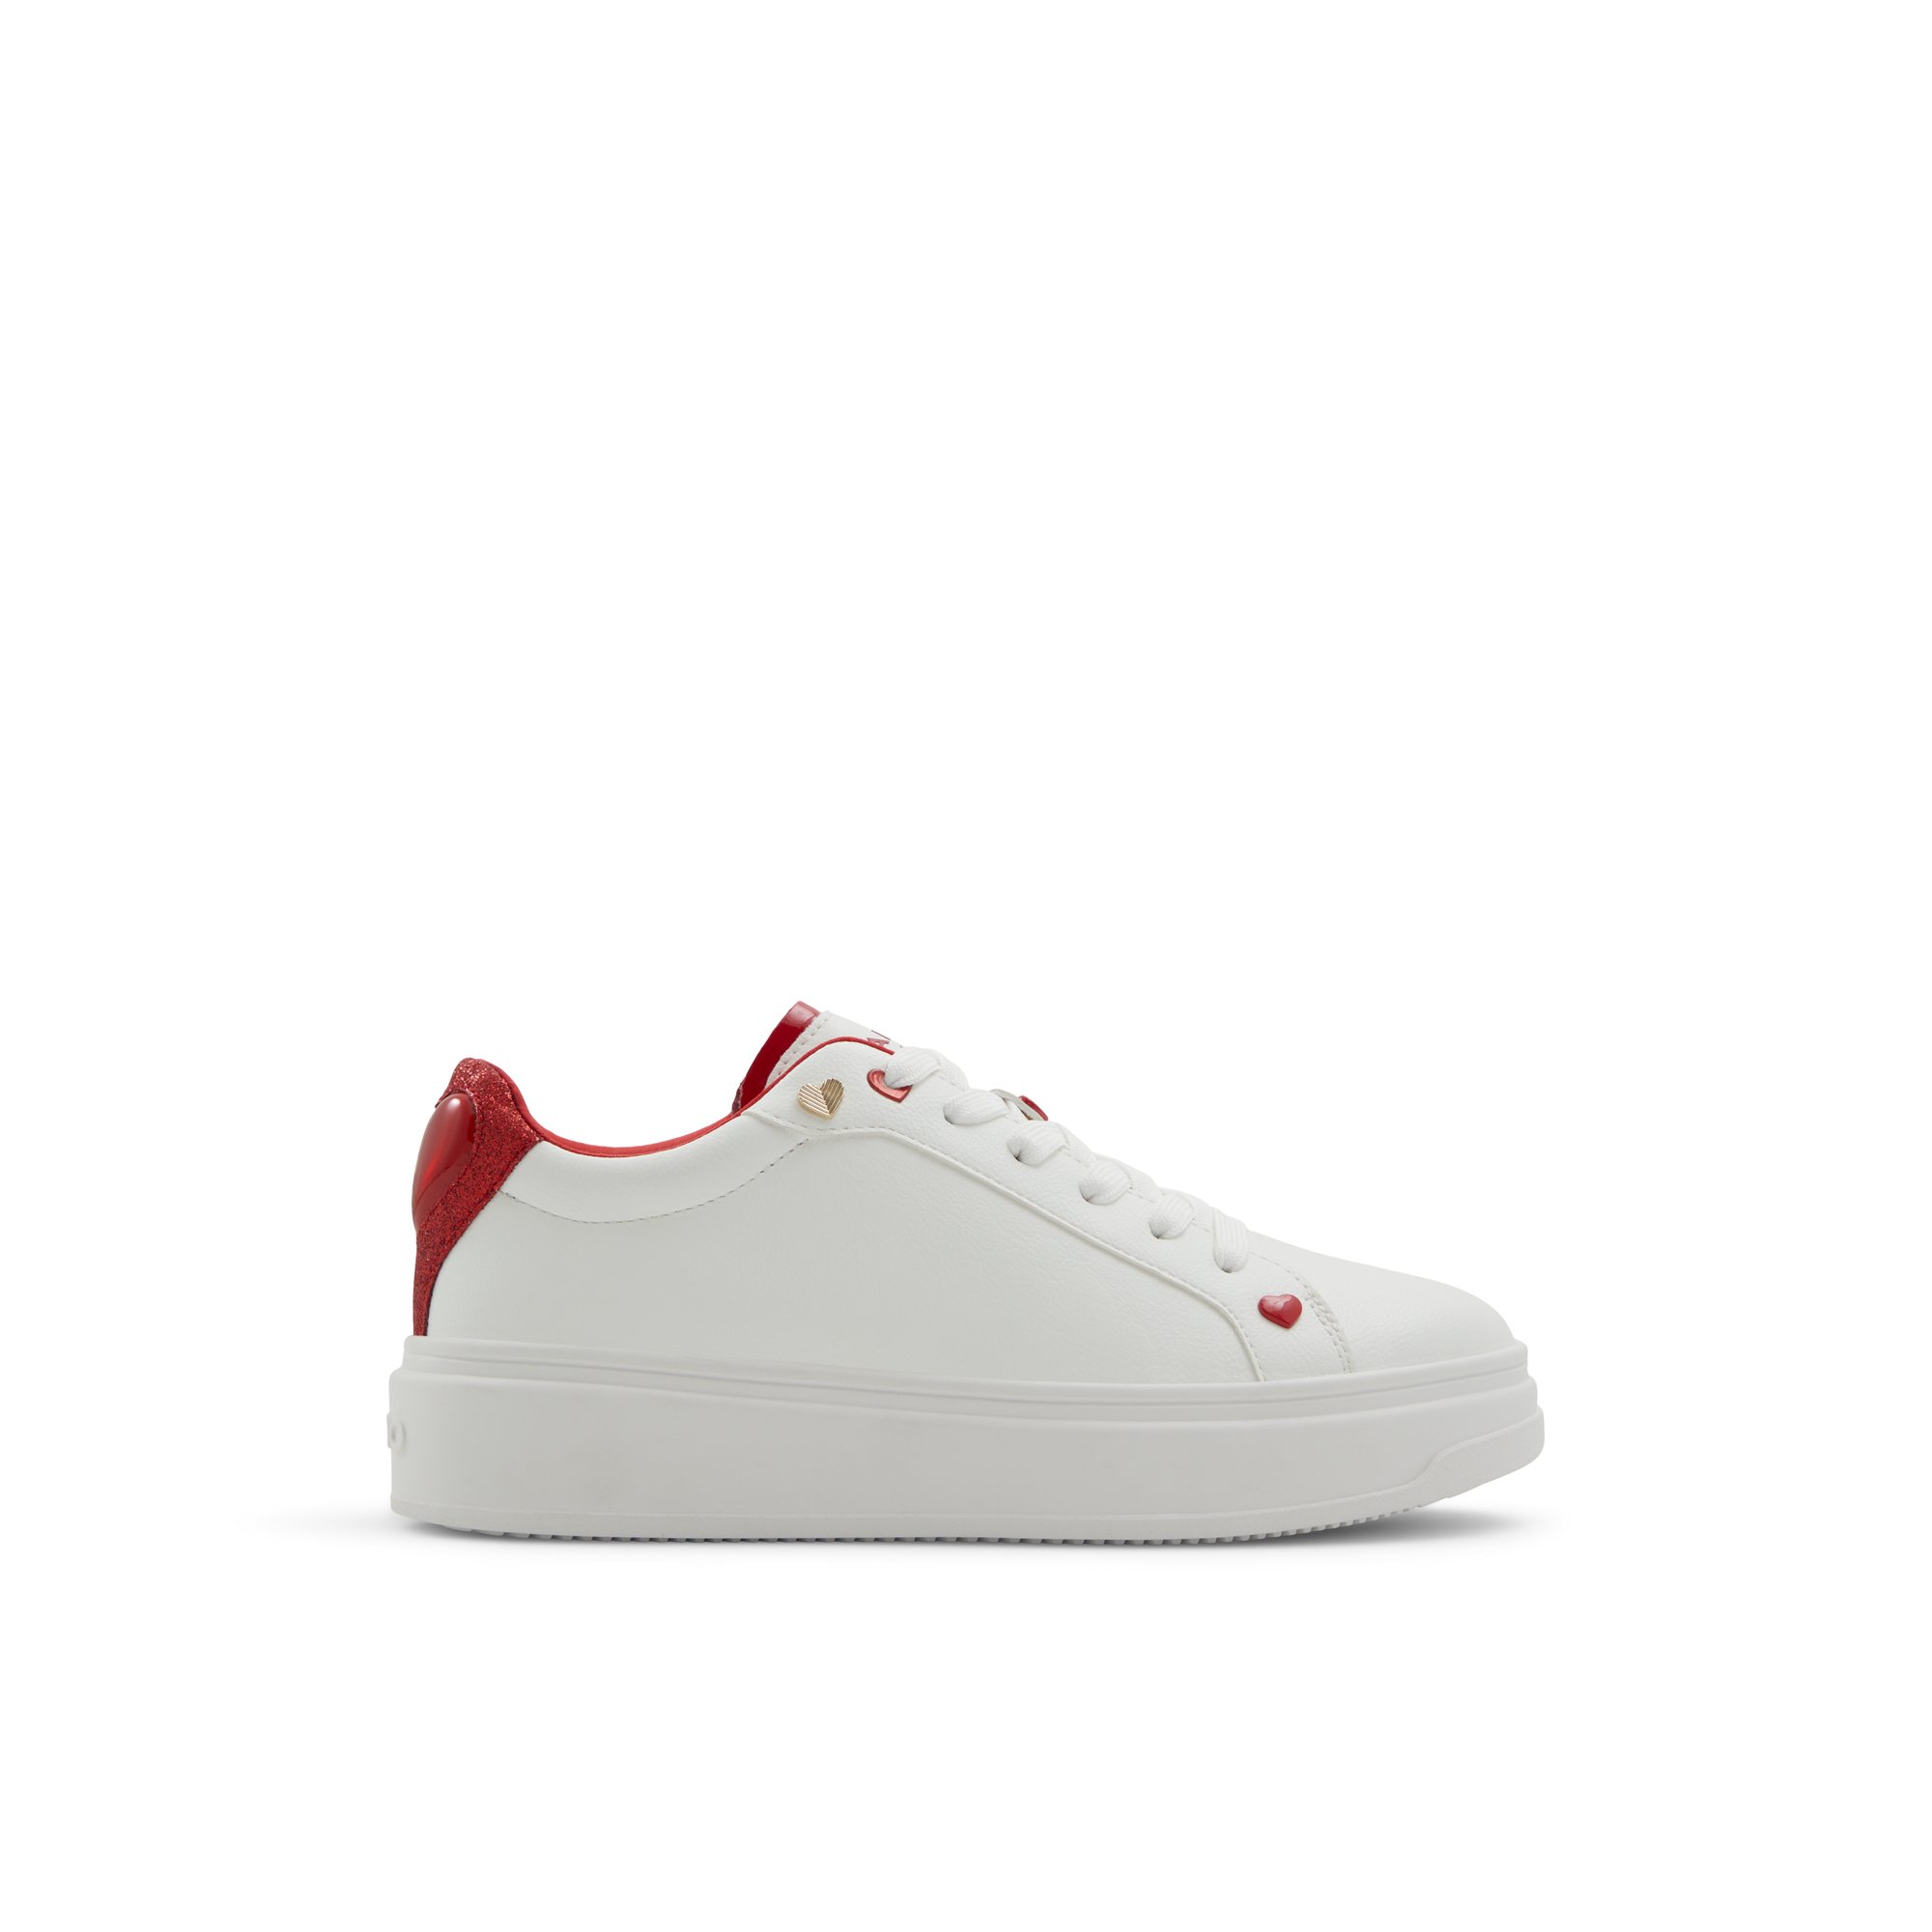 ALDO Rosecloud - Women's Low Top Sneaker Sneakers - Red